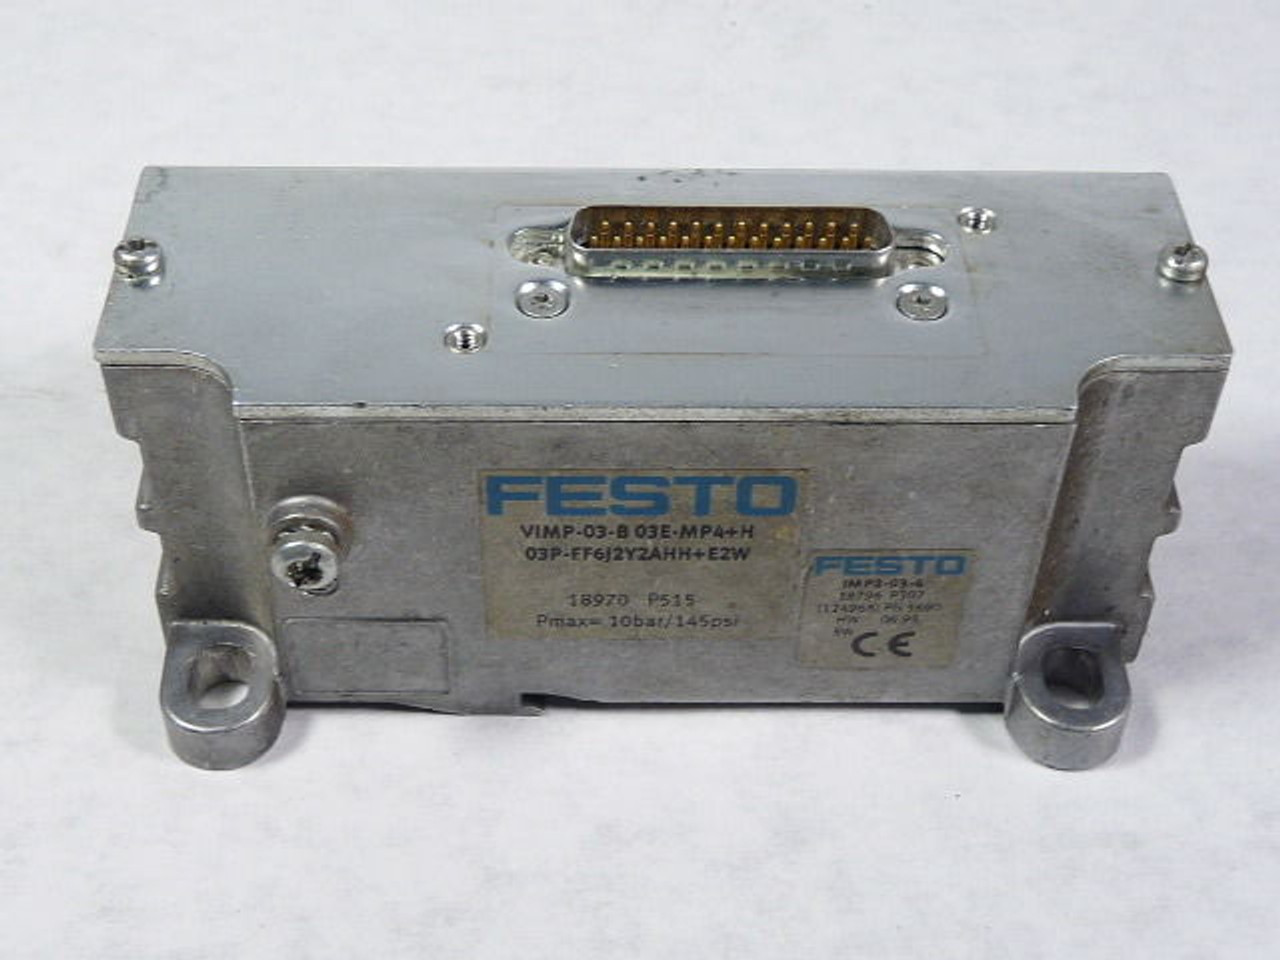 Festo VIMP-03-B03E-MP4+H03P-FF6J2Y2AHH+E2W Pneumatic Valve Terminal ! WOW !